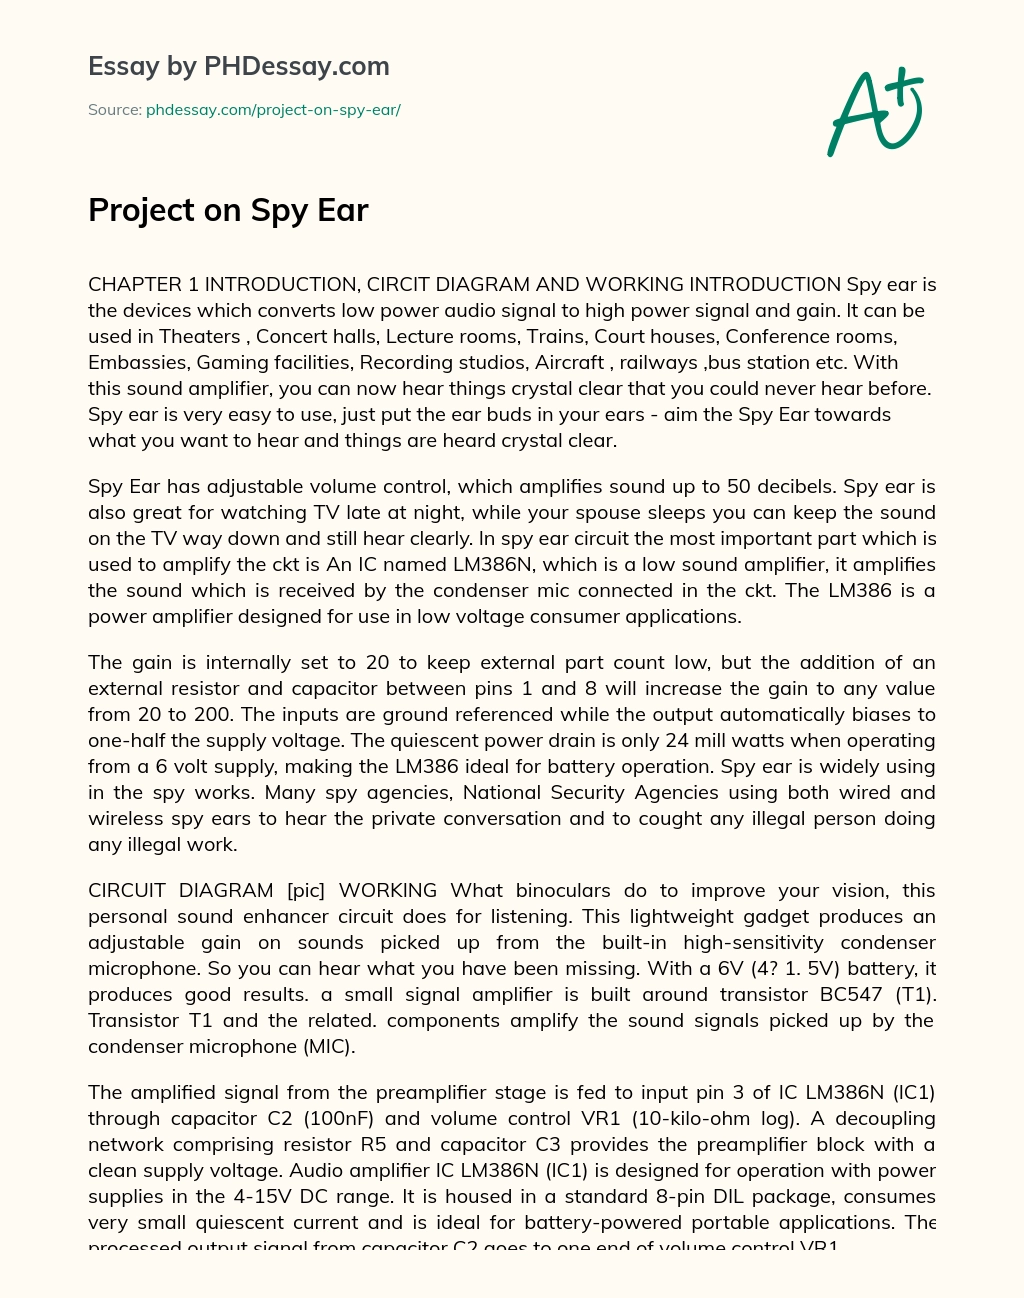 Project on Spy Ear essay